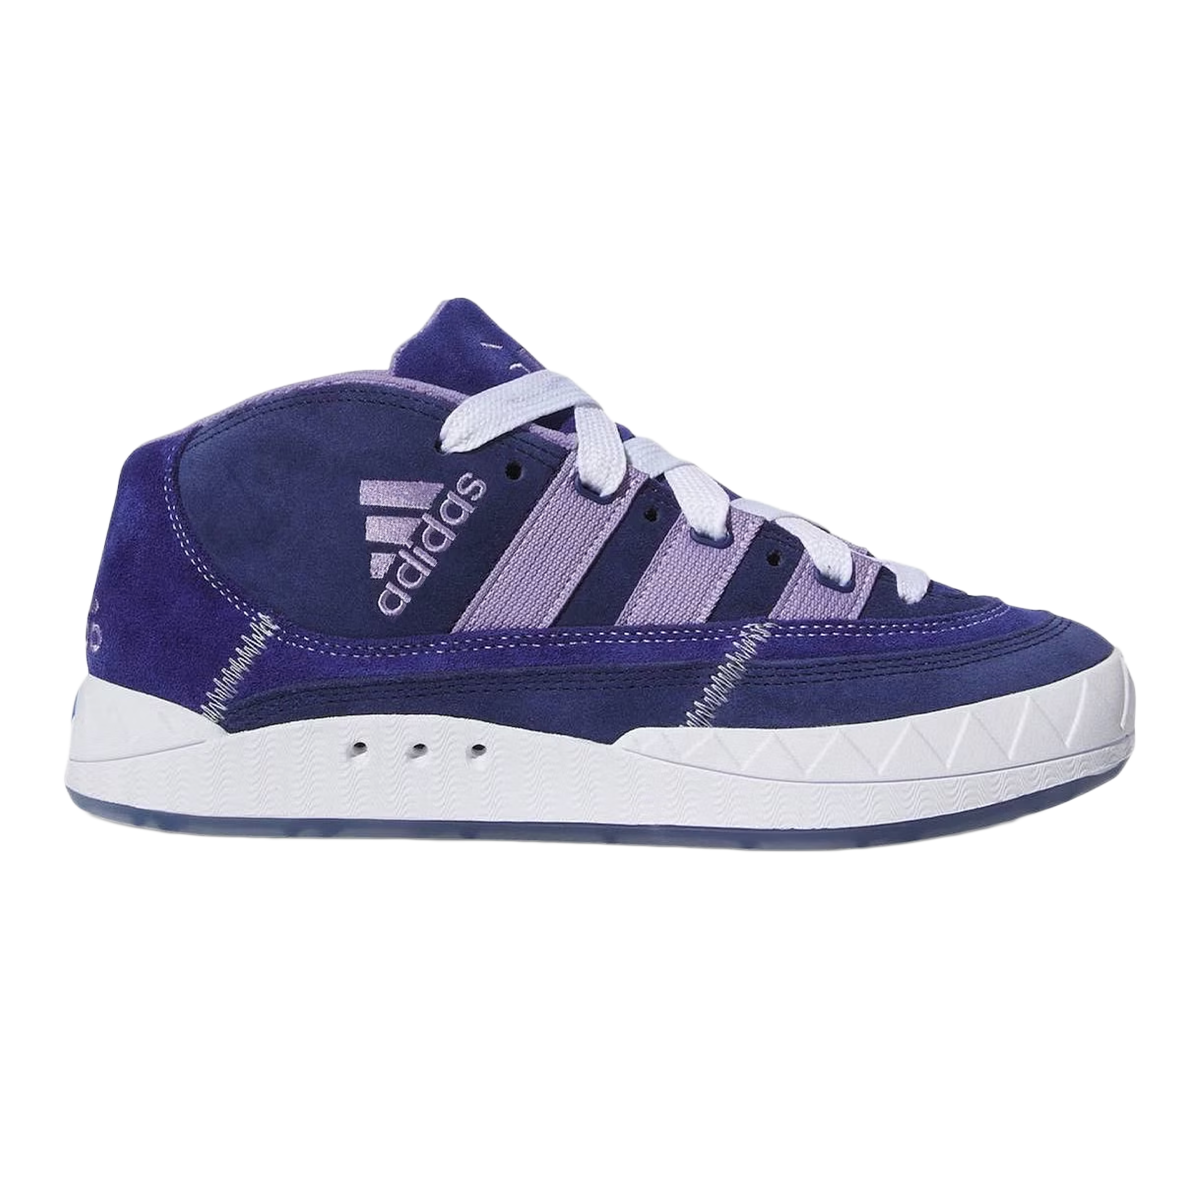 Adidas x Maite Adimatic Mid Shoes - Blue/Lilac/White